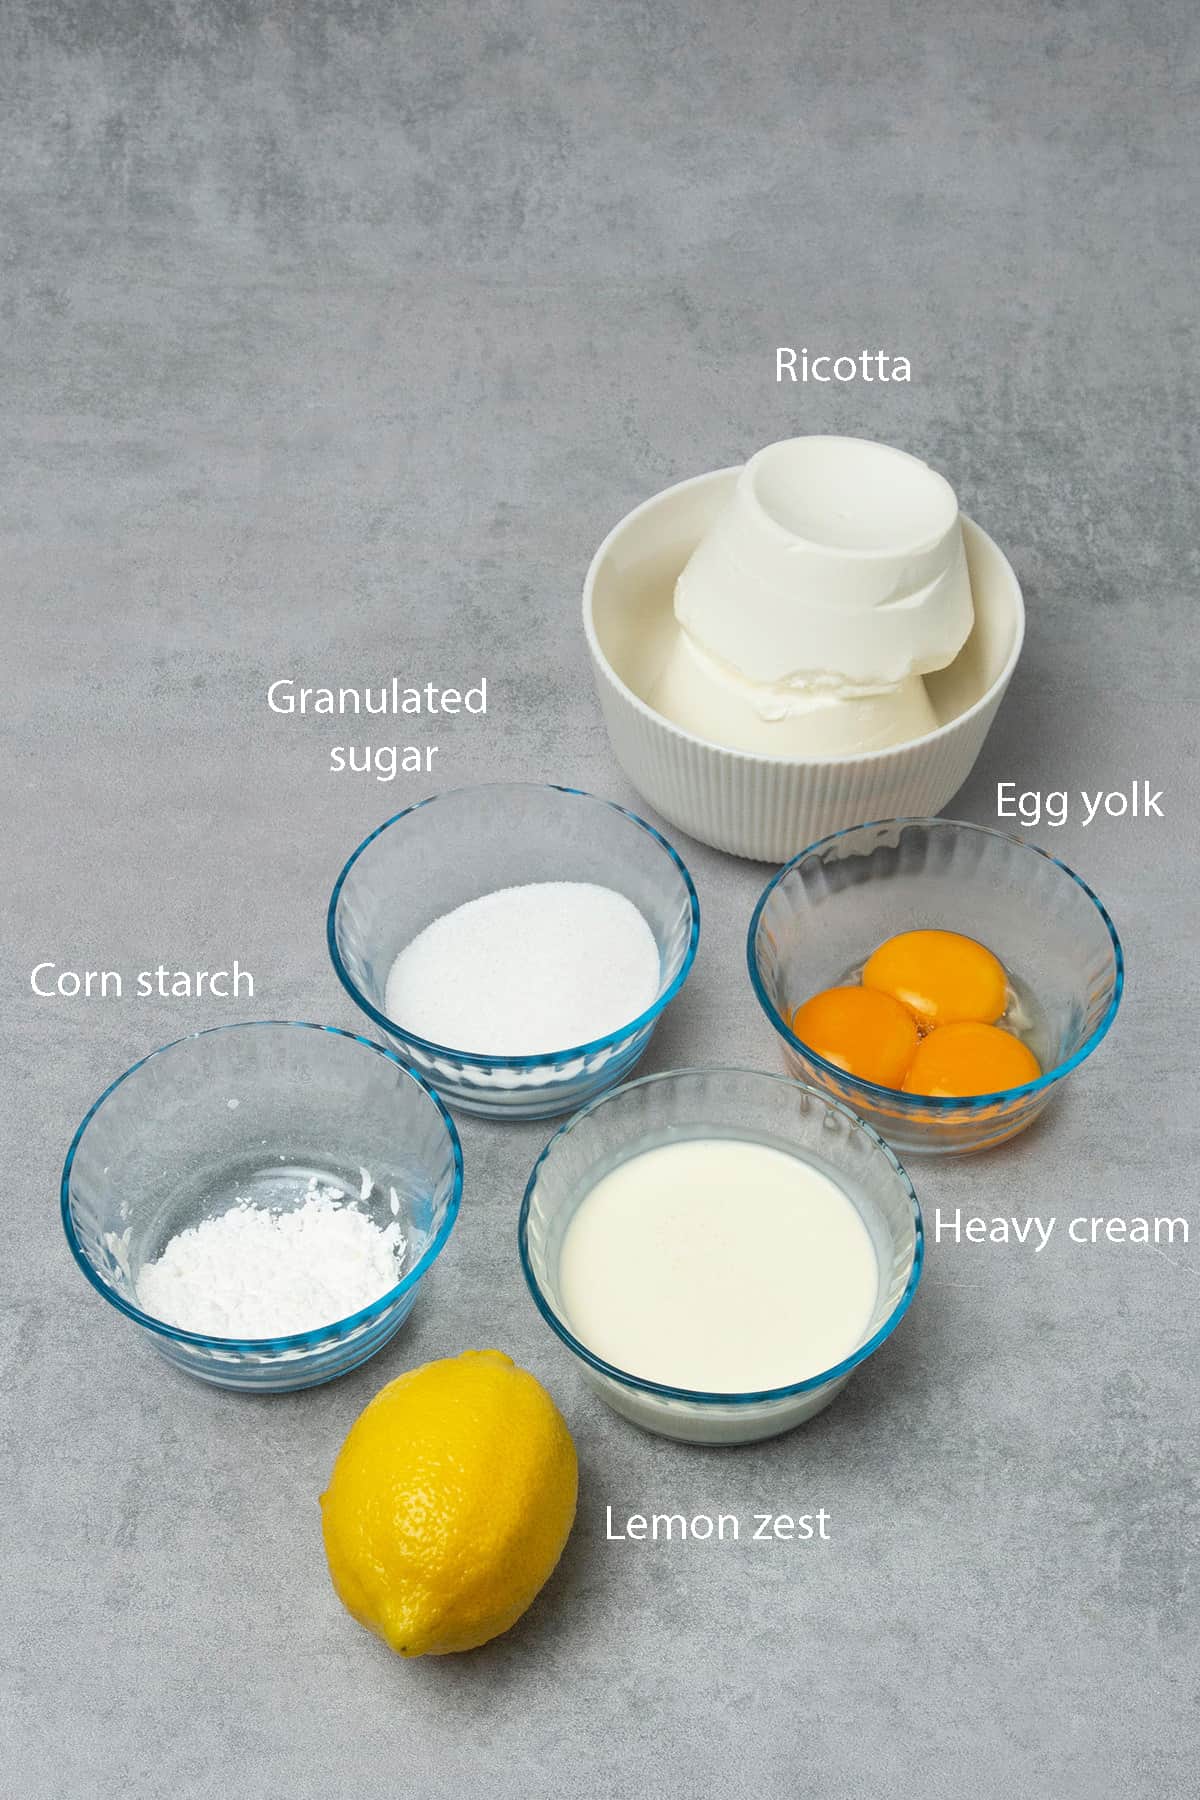 Ricotta filling ingredients